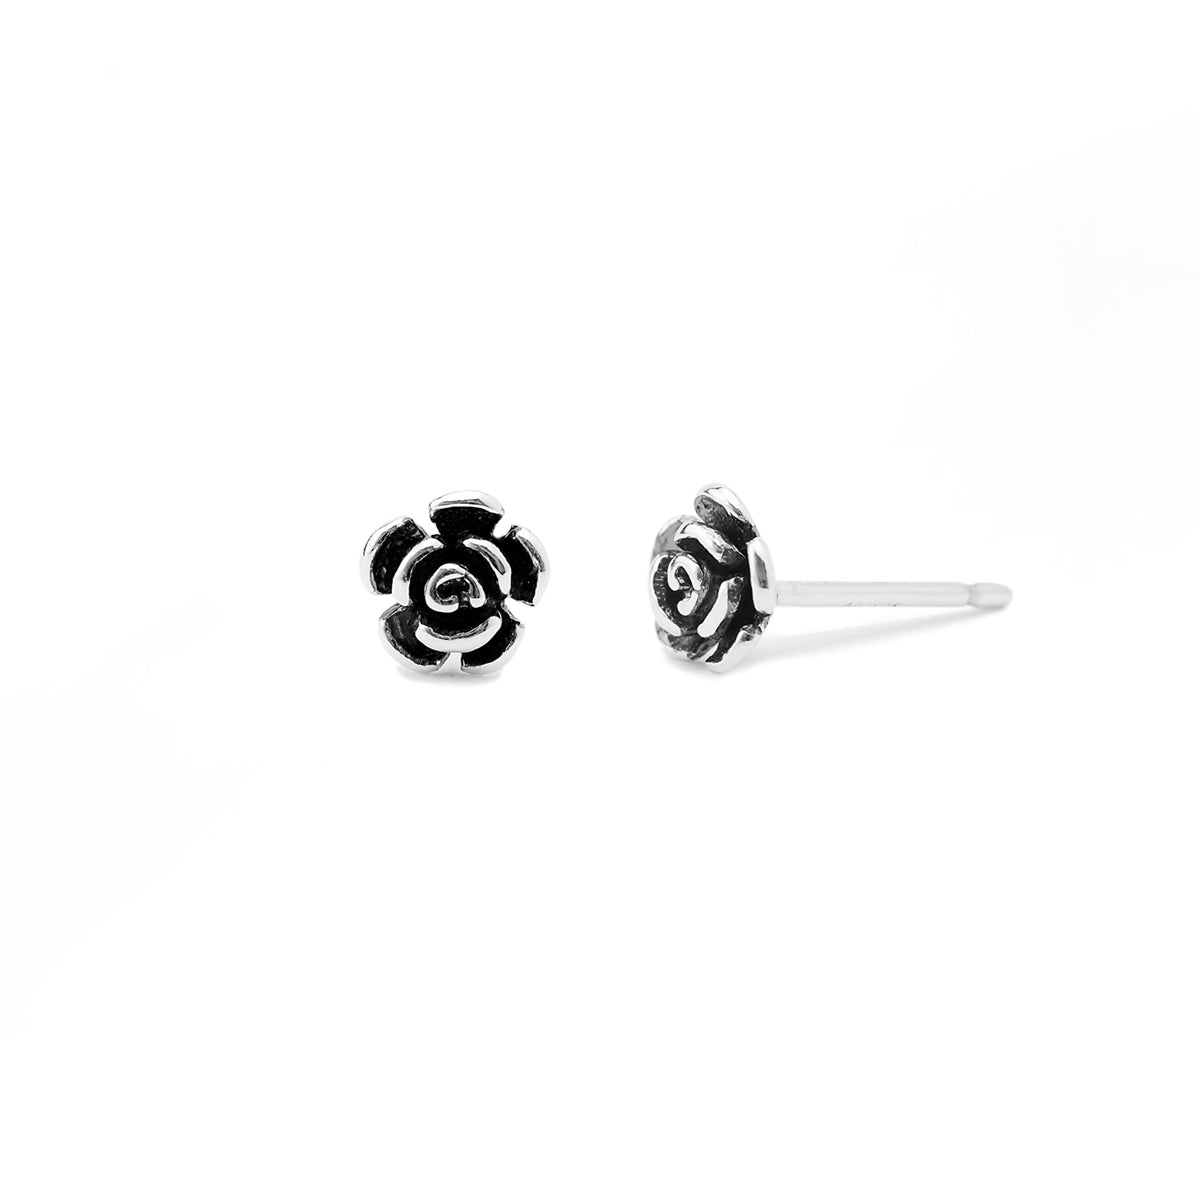 Boma Sterling Silver Post Earrings - Rose    